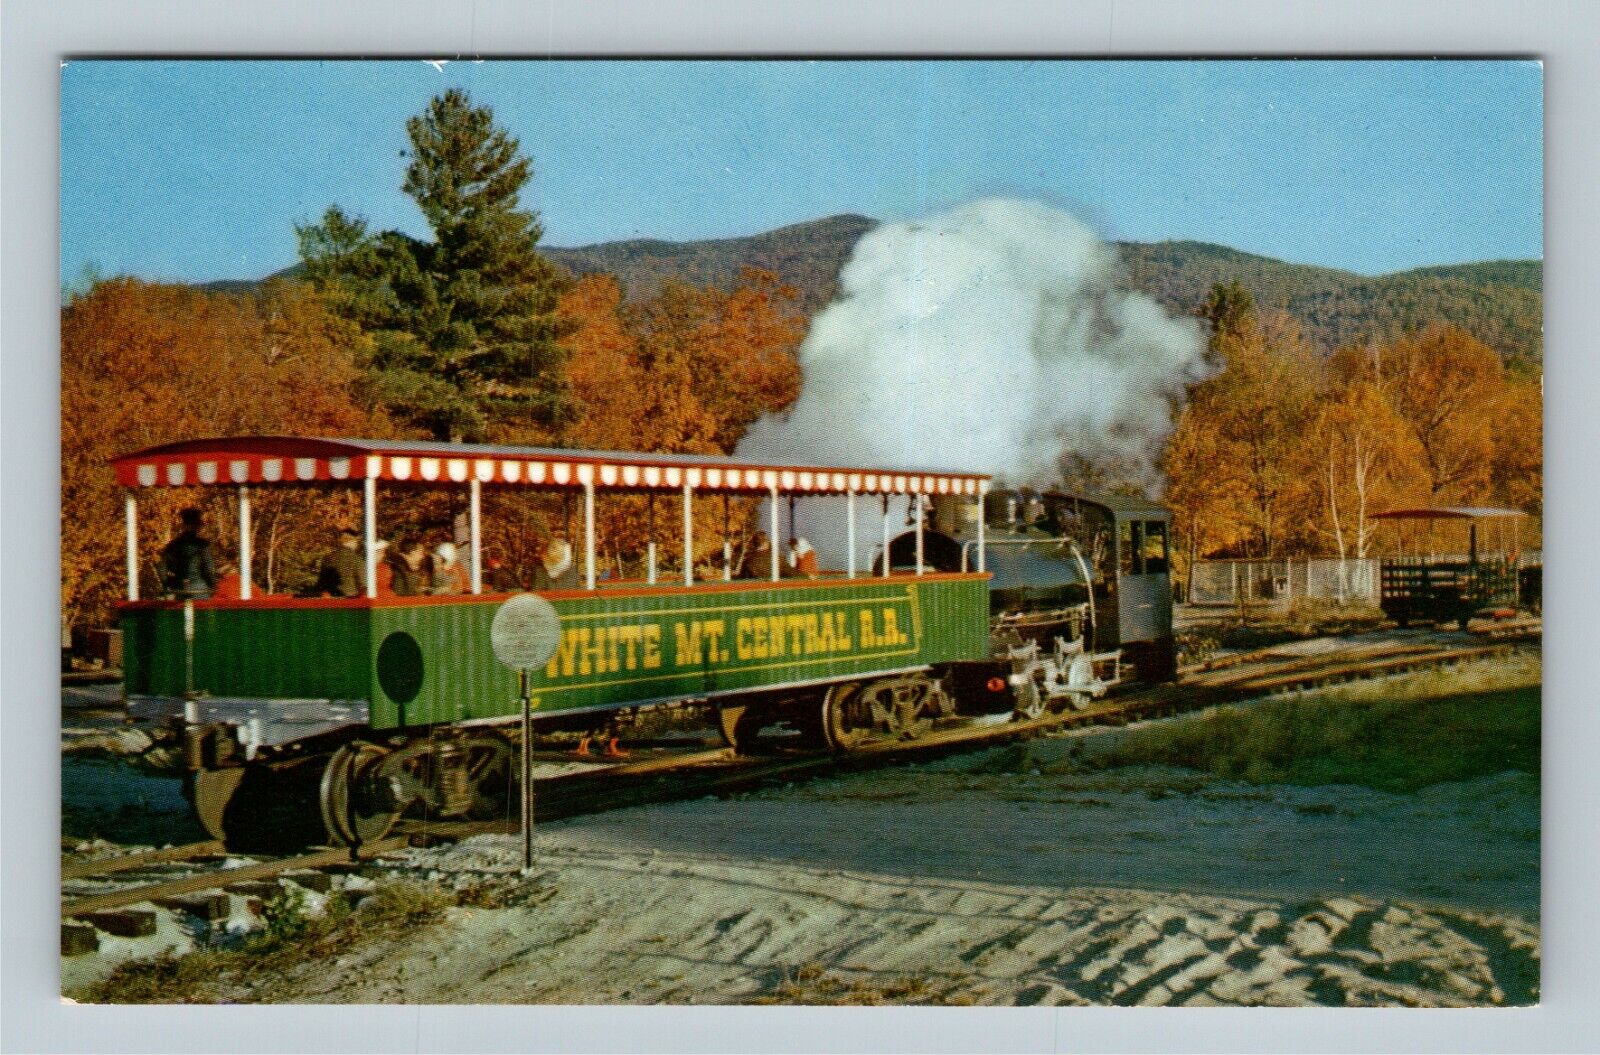 Riding The White Mt Central Railroad, Vintage Postcard